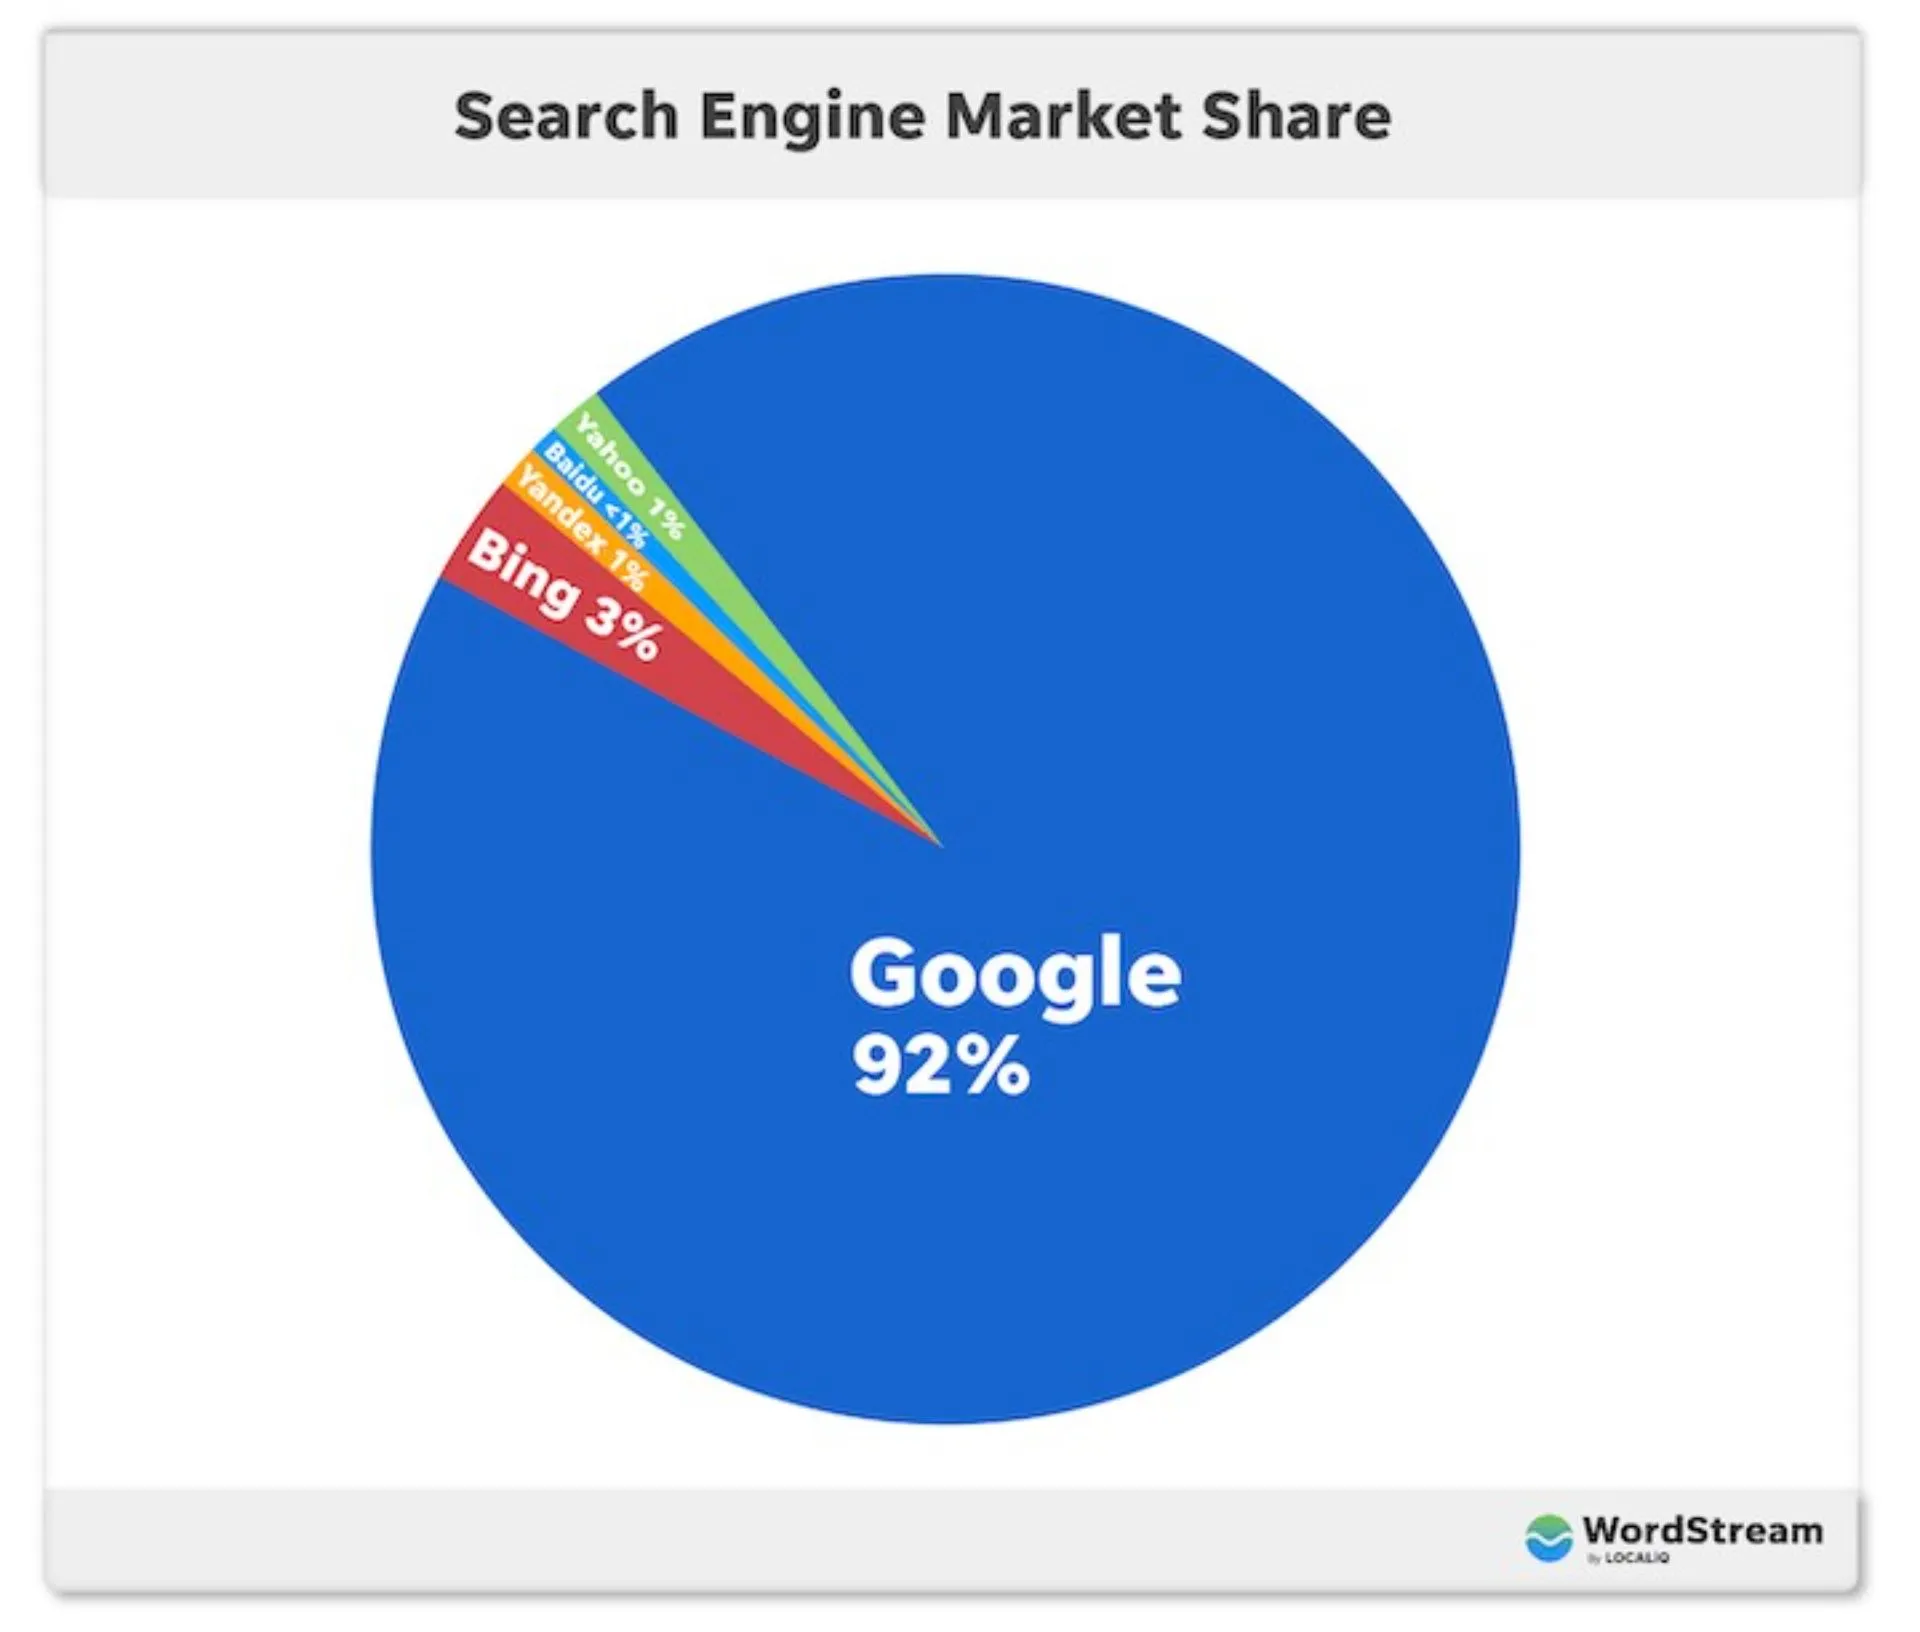 Quota de mercado Google Search Engine